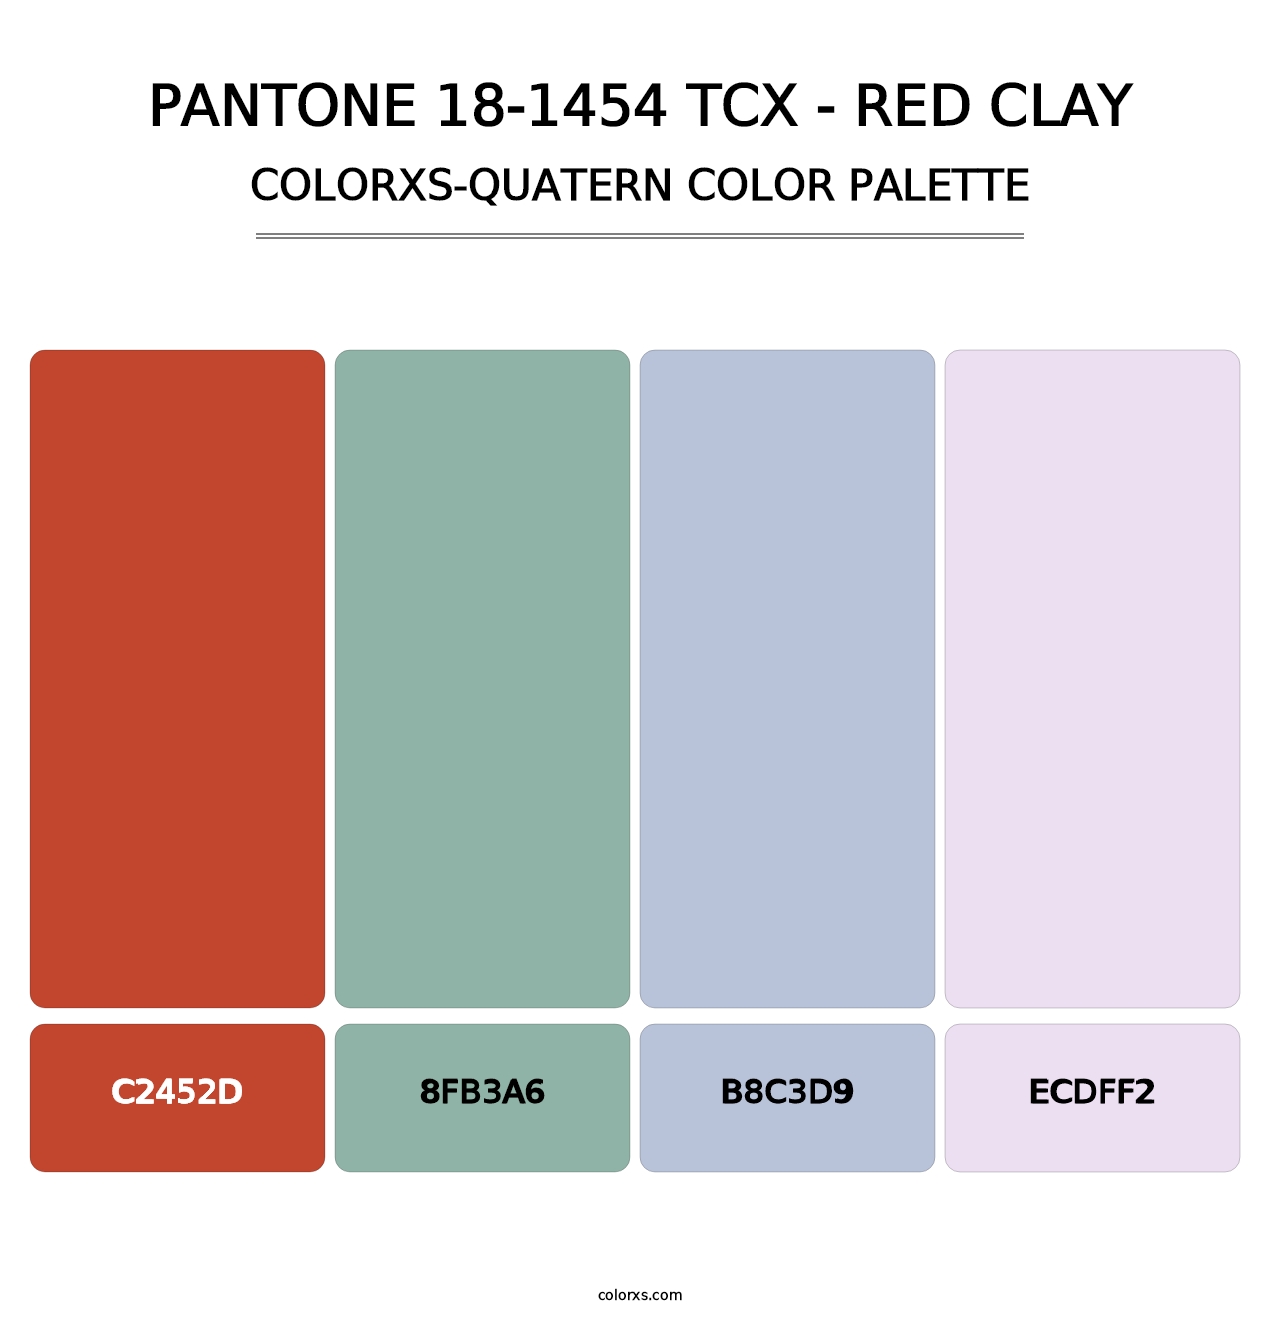 PANTONE 18-1454 TCX - Red Clay - Colorxs Quatern Palette